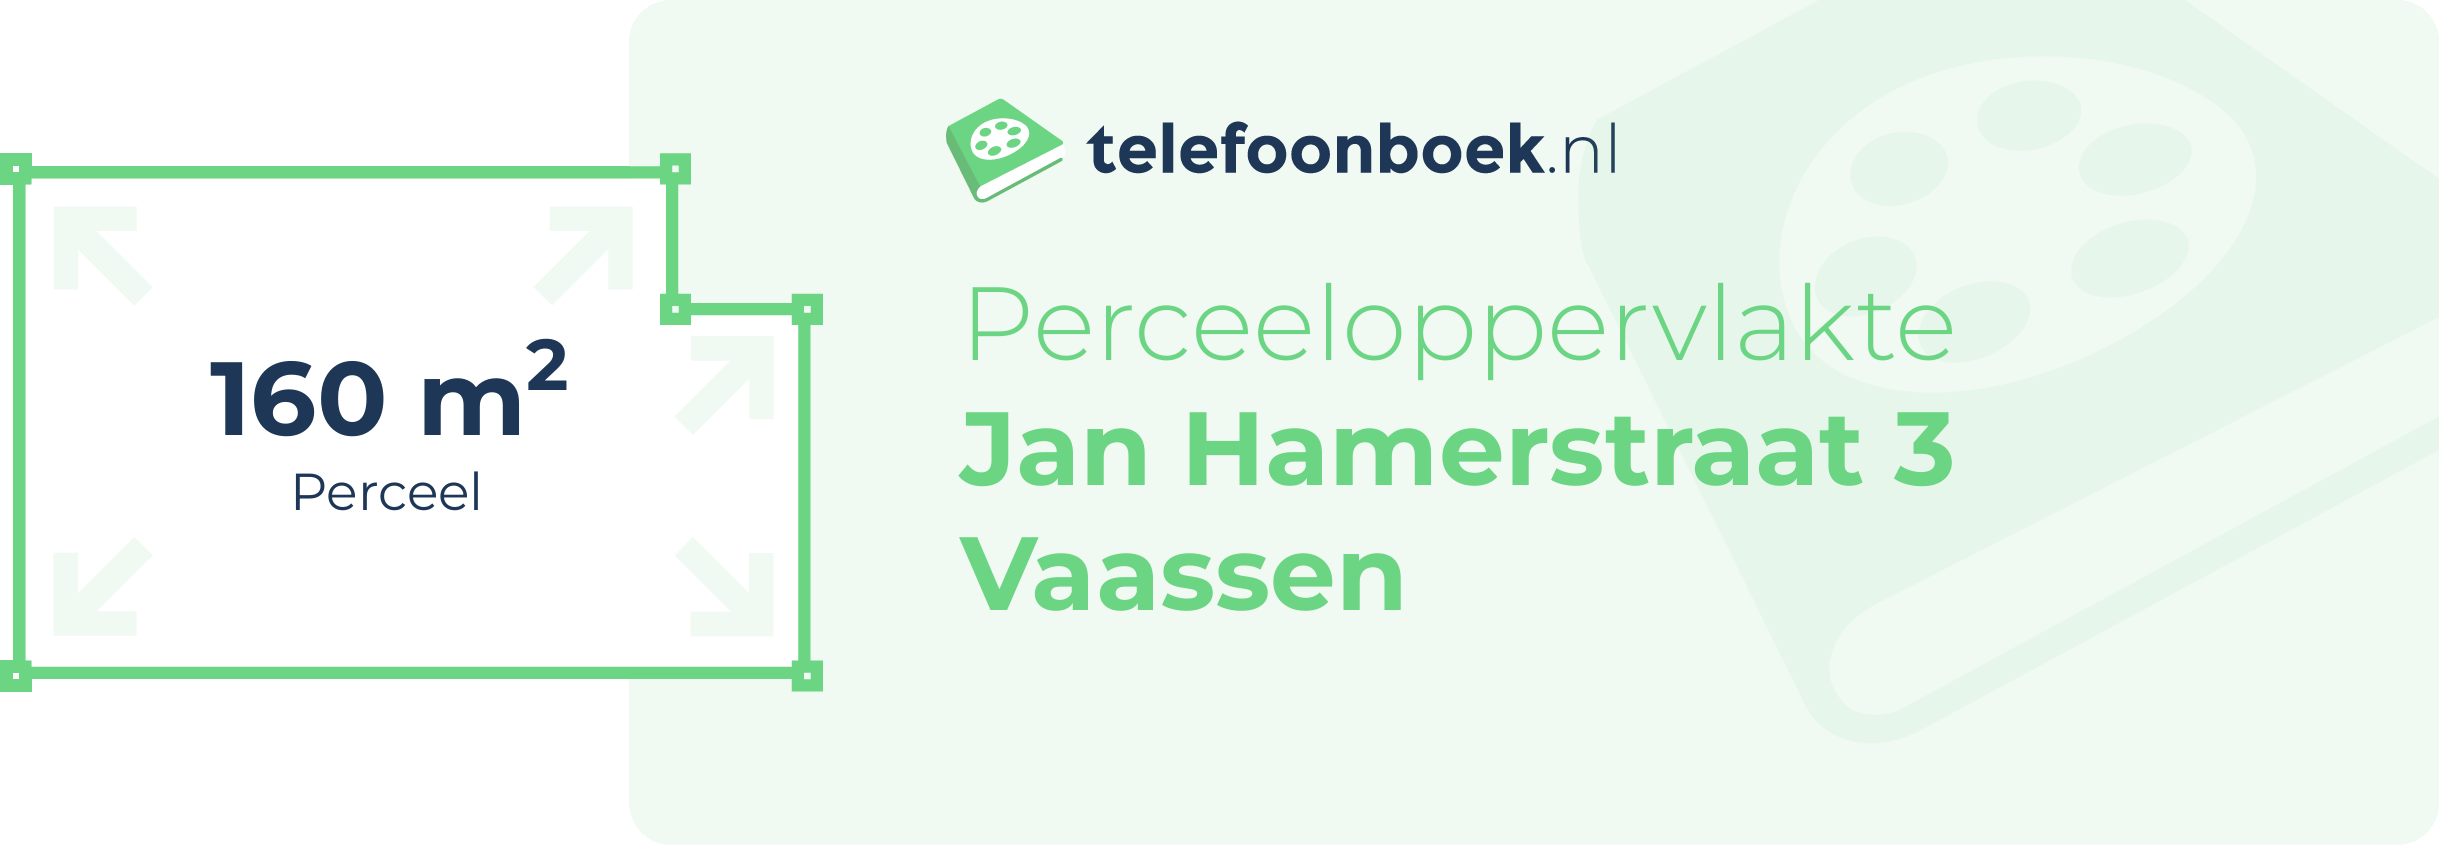 Perceeloppervlakte Jan Hamerstraat 3 Vaassen